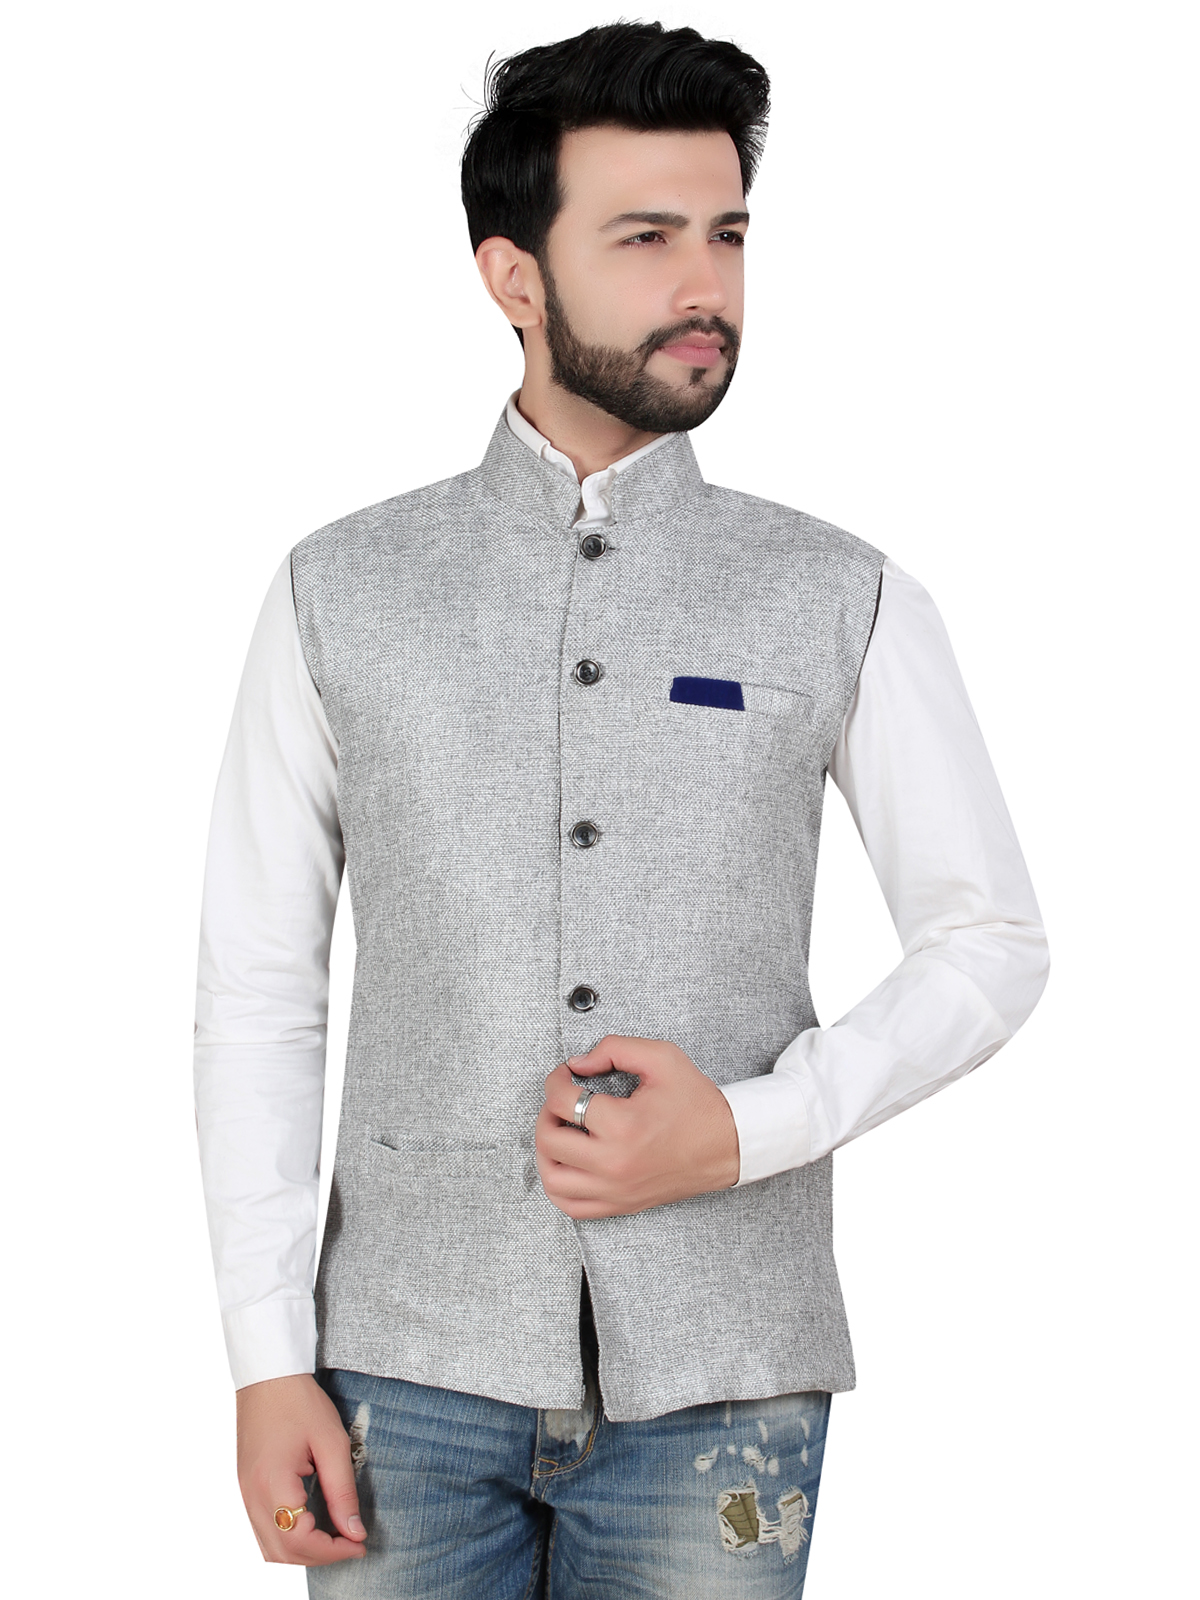 Buy Modi Jacket Men's Off White Online @ ₹499 from ShopClues